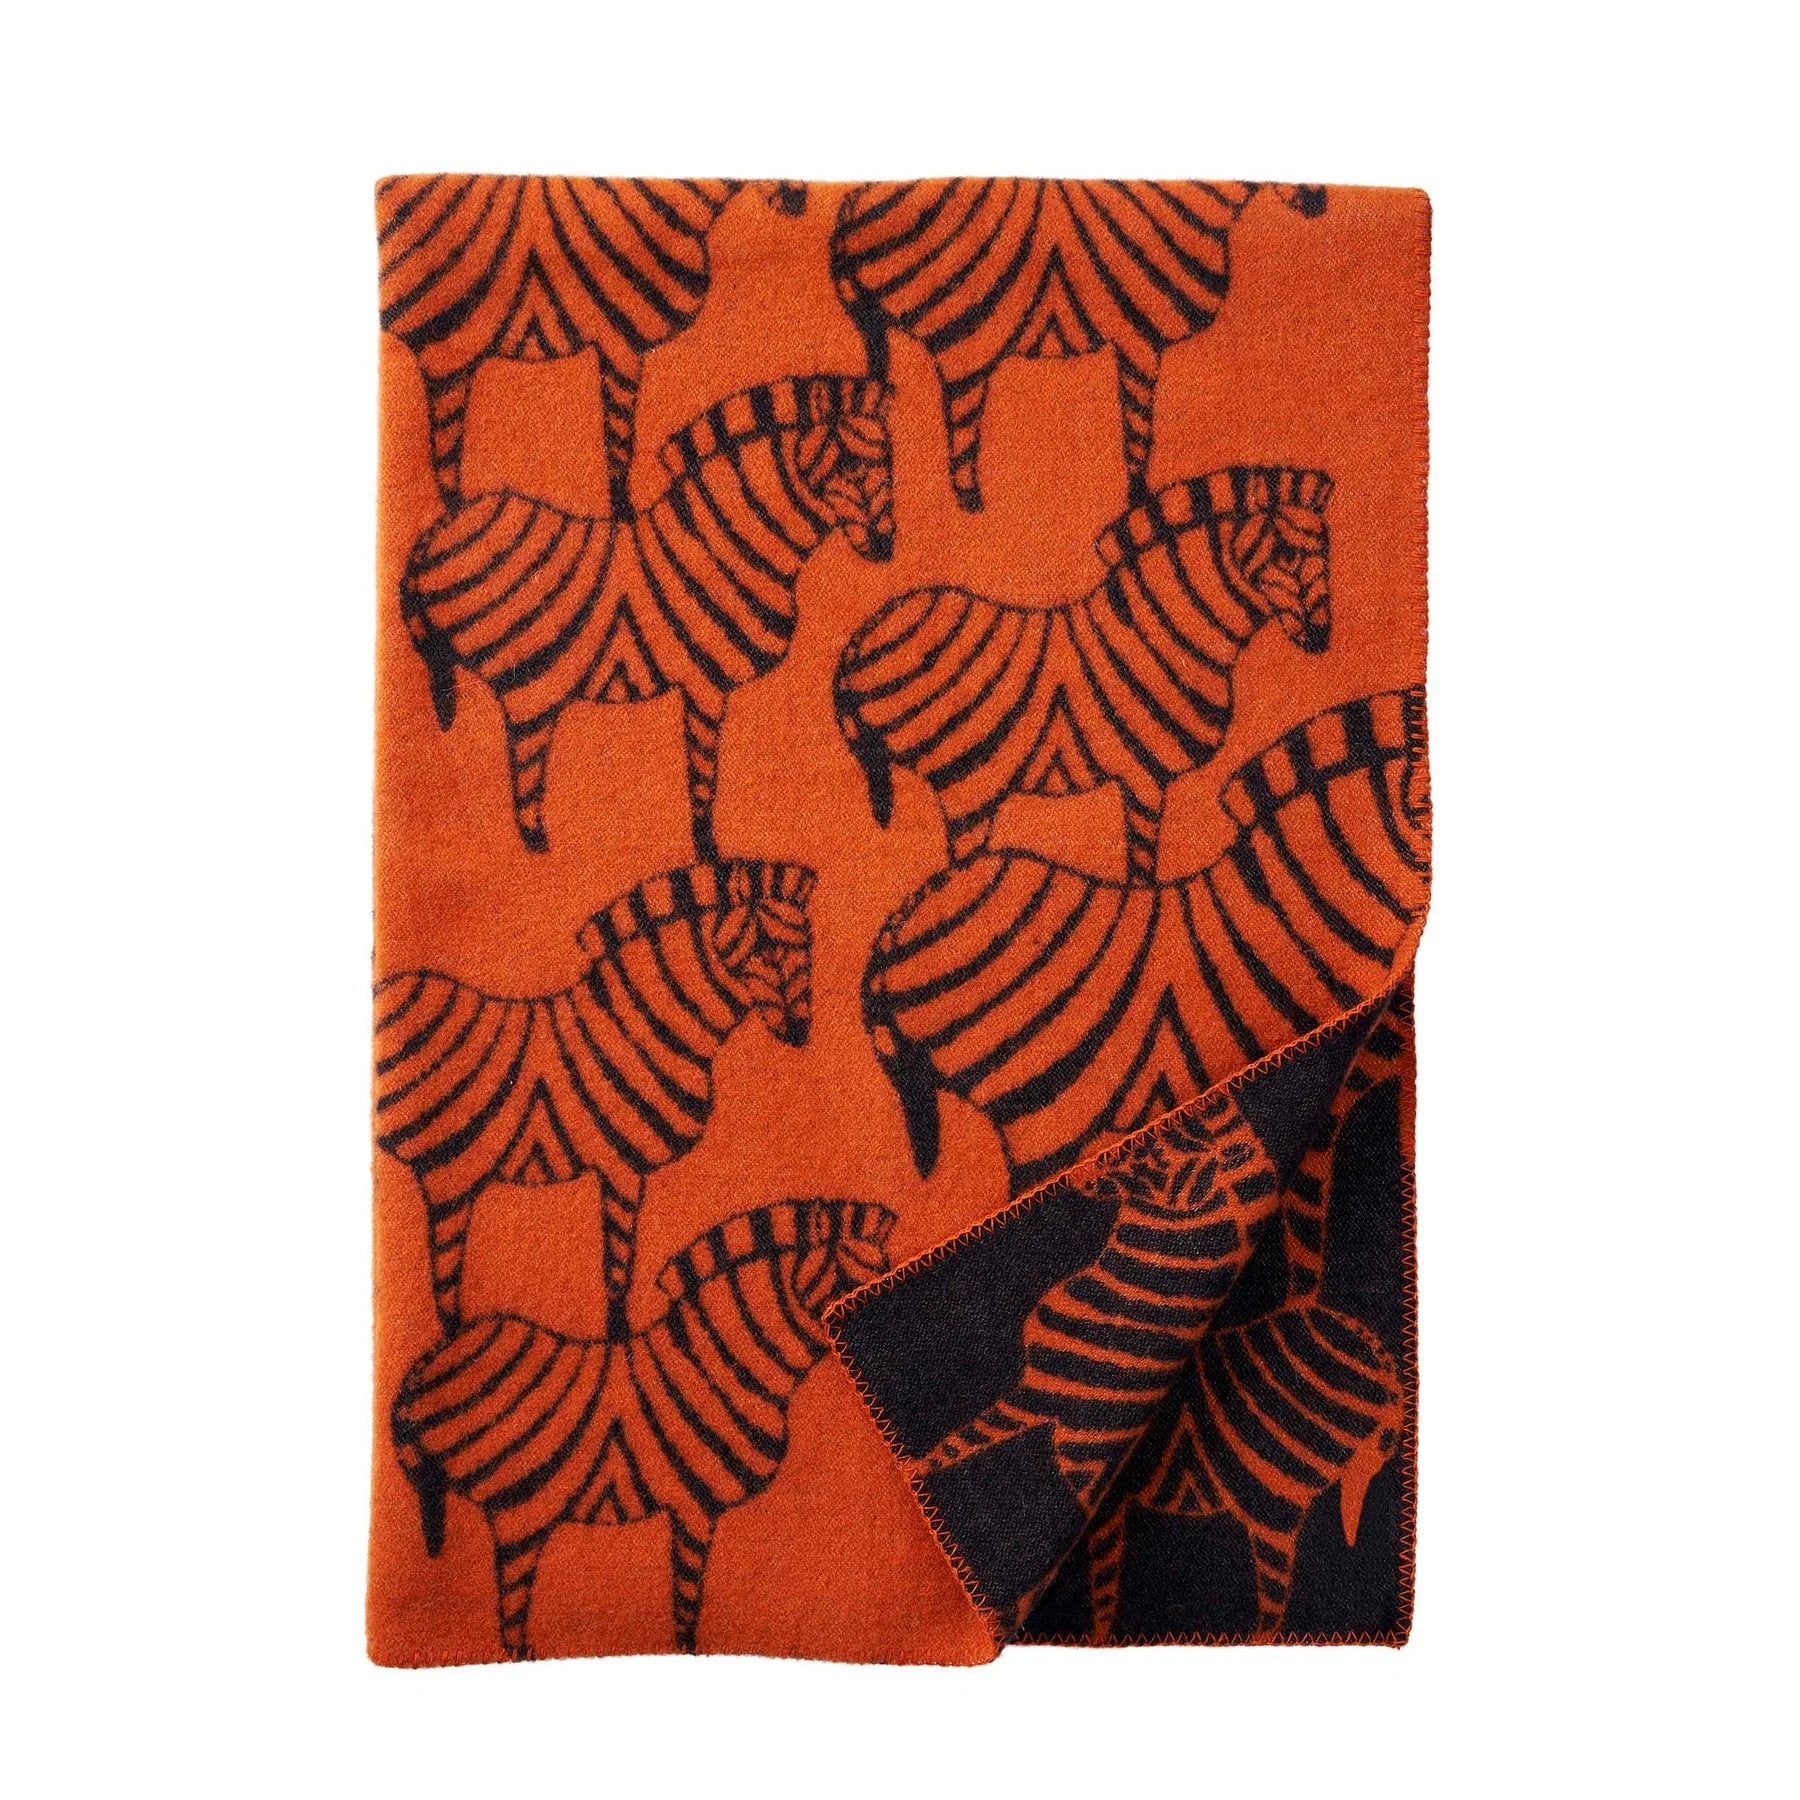 Klippan wool blanket Zebras by Lisa Larson Orange black